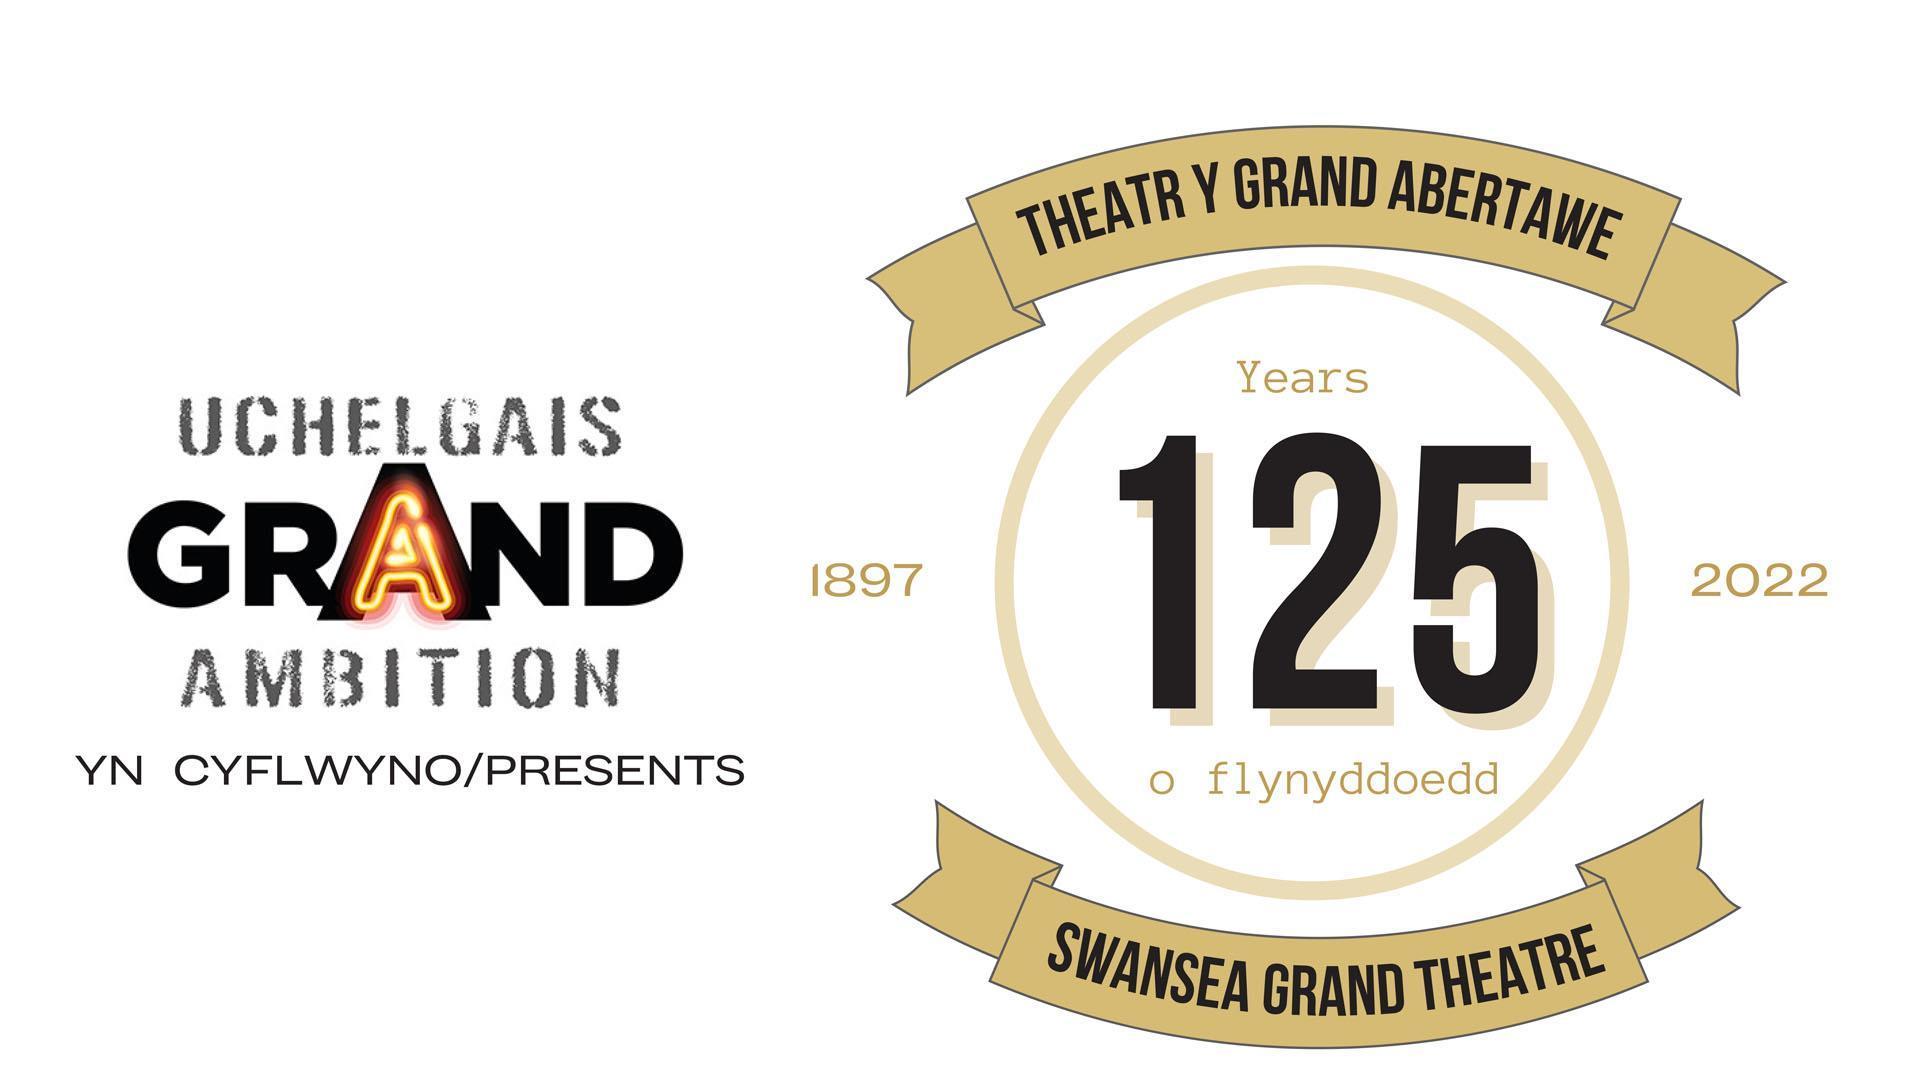 Swansea Grand Theatre's 125th Birthday Gala